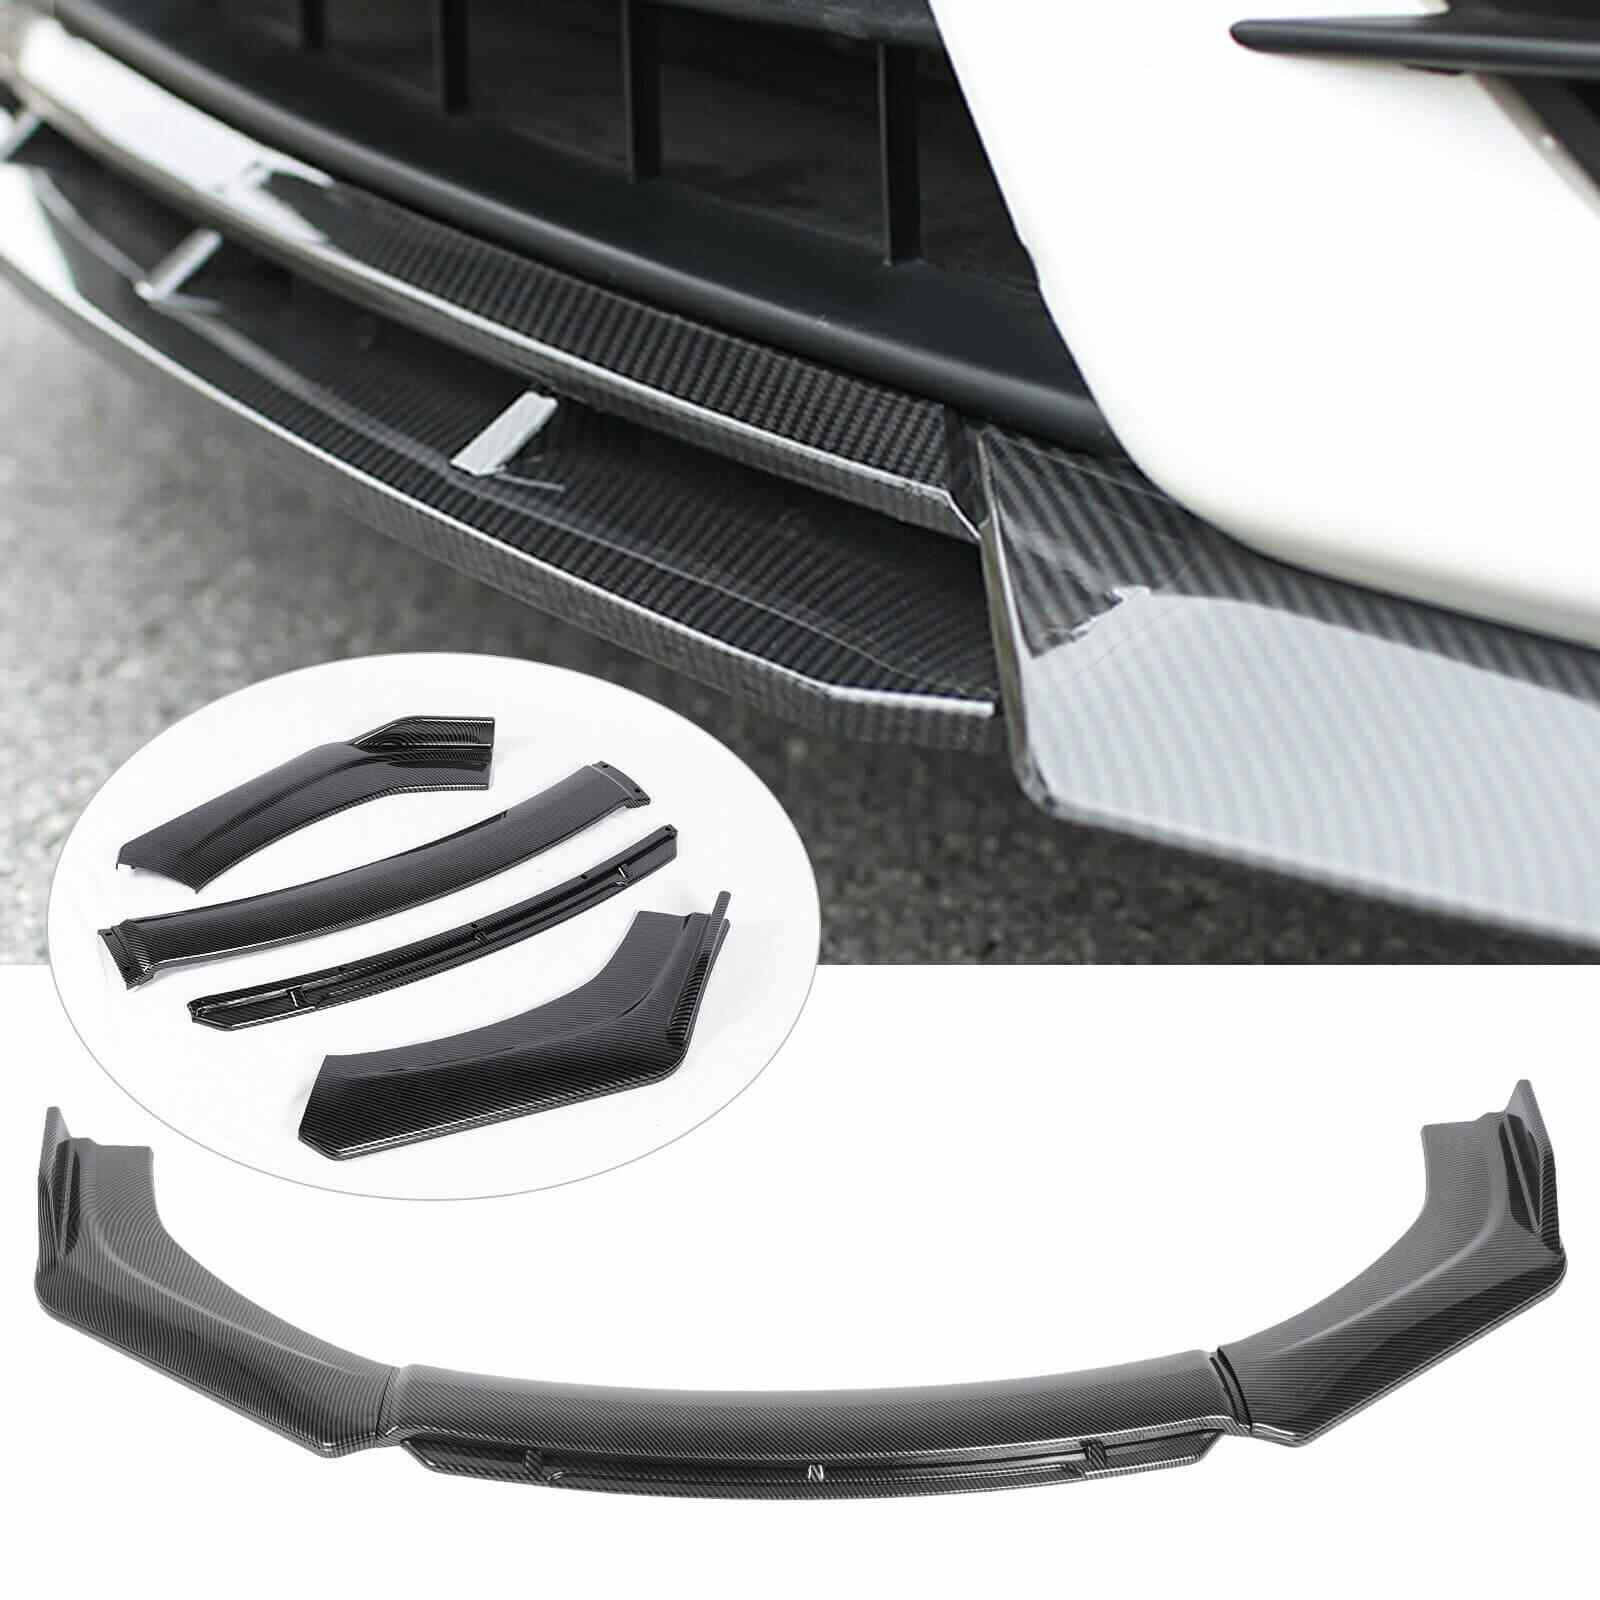 Showing of 3D Universal Car Front Bumper Lip Spoiler